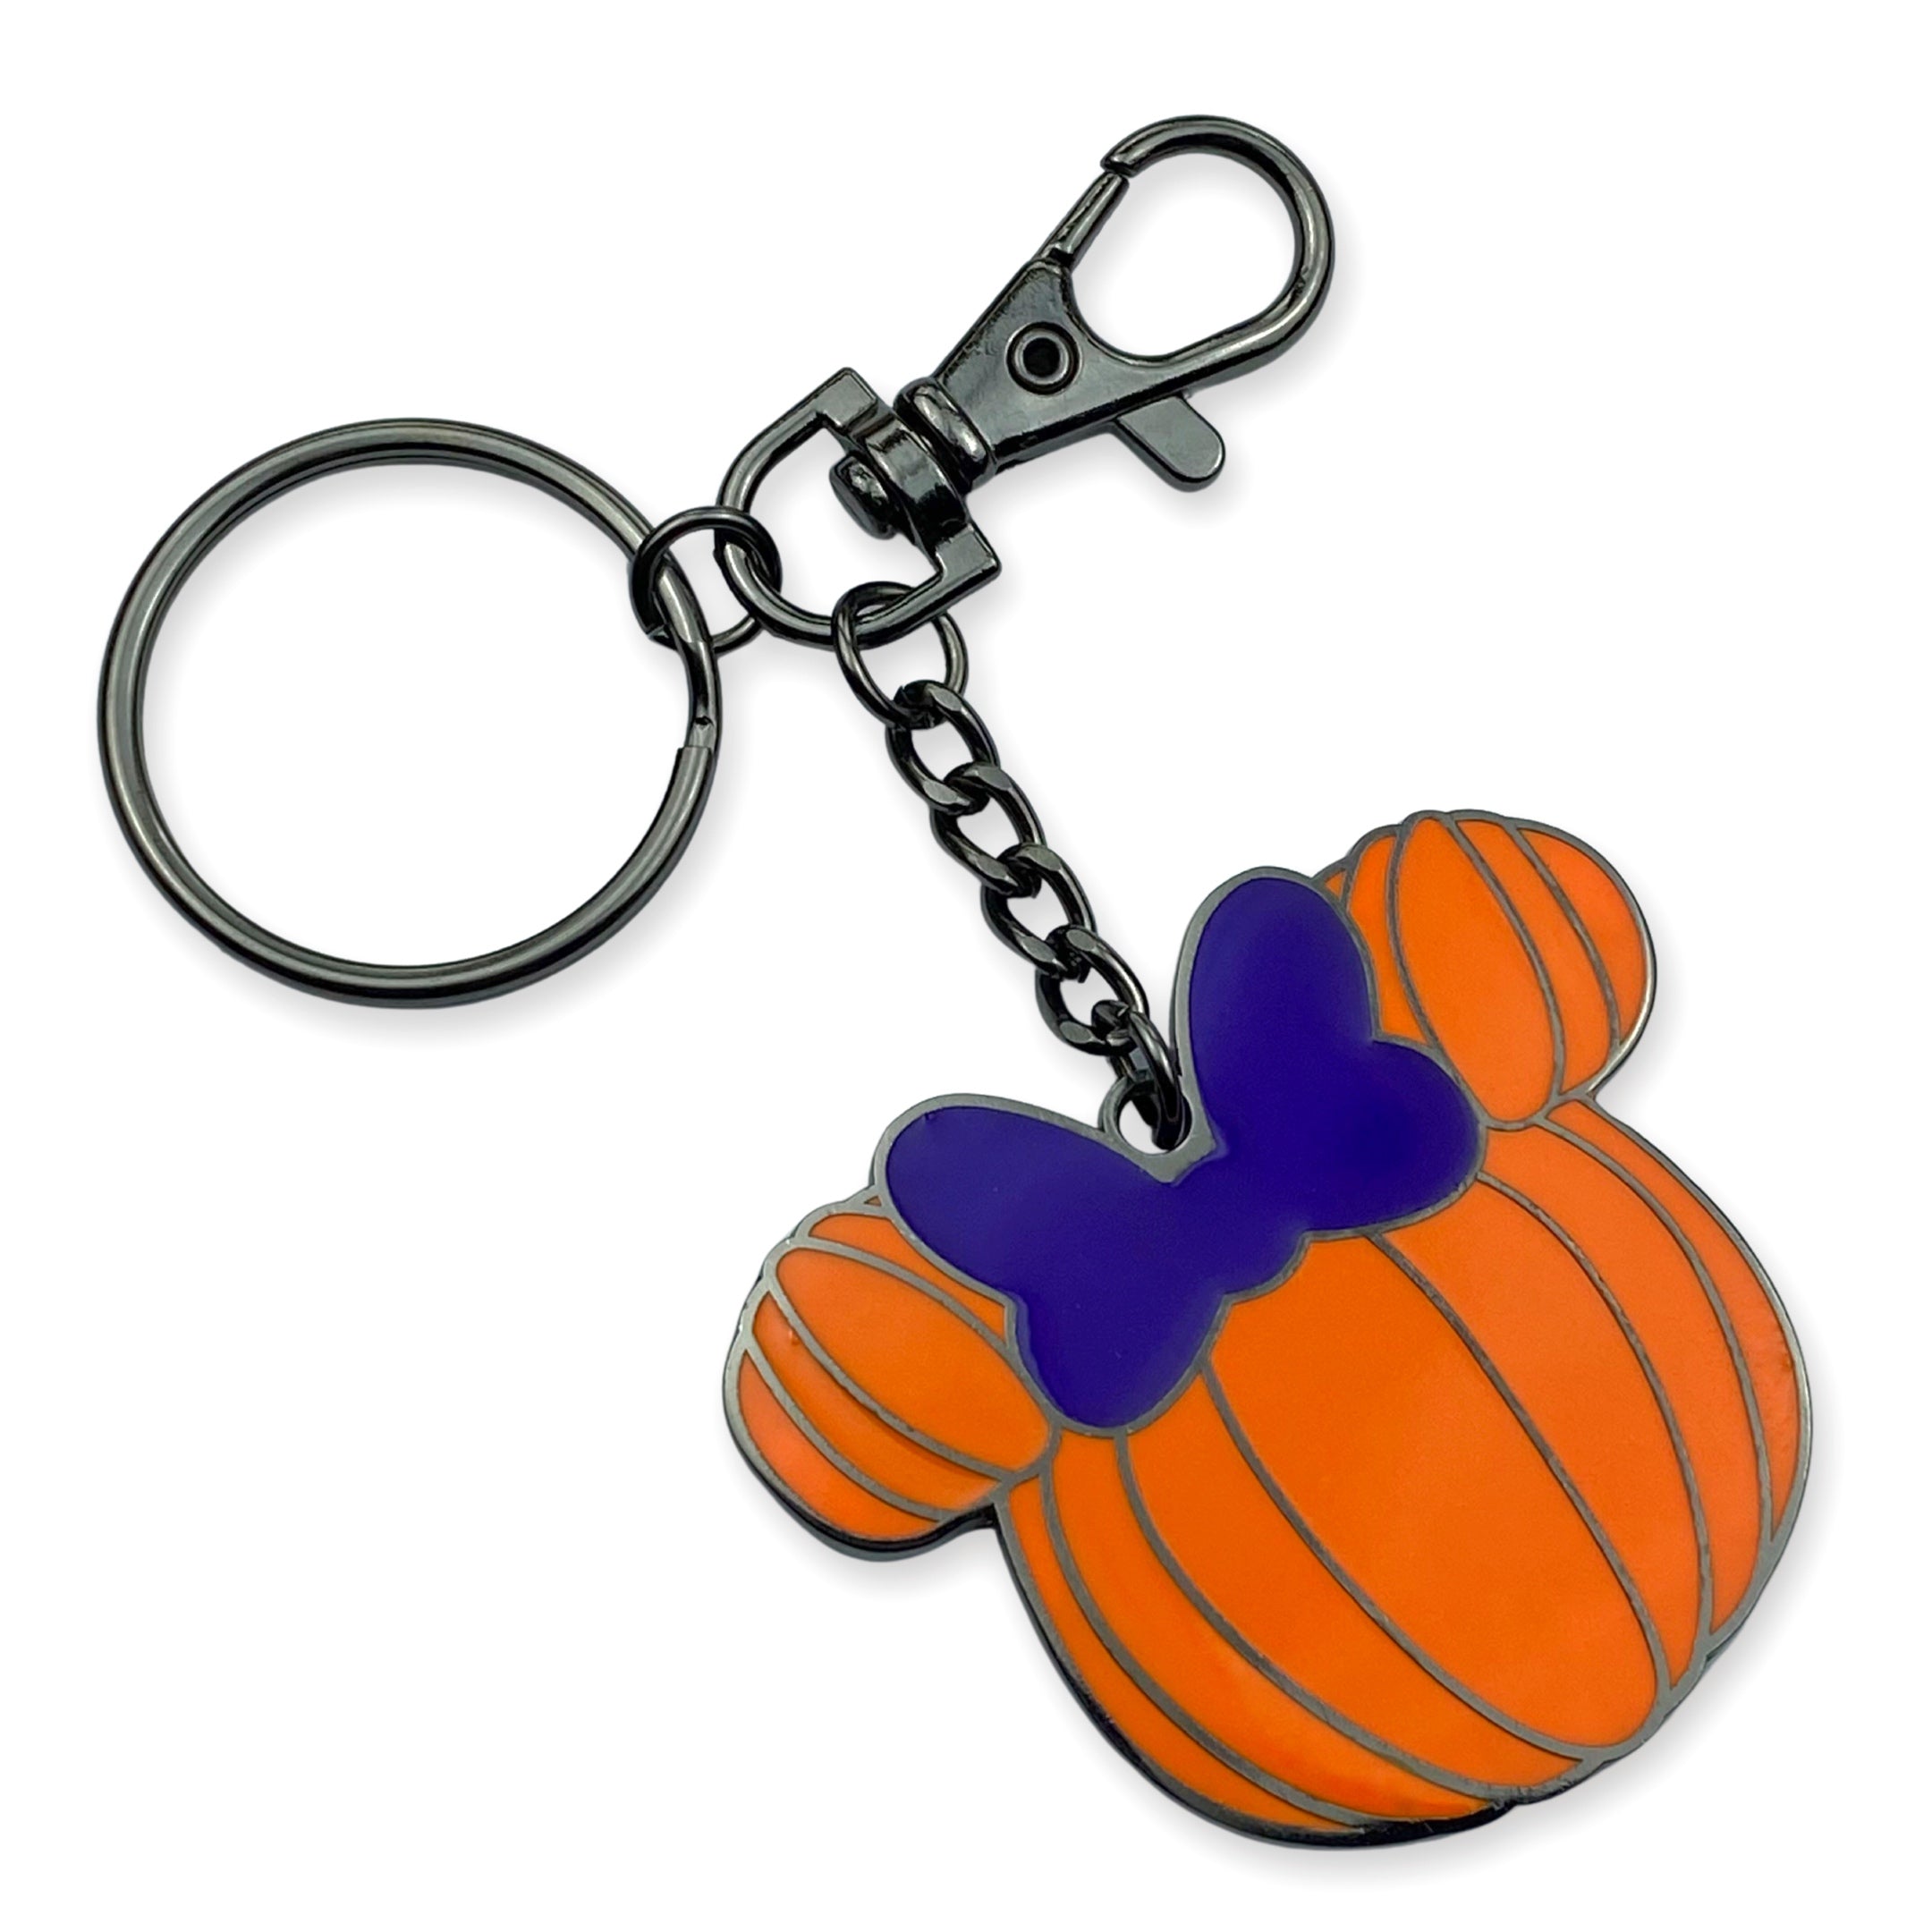 Keychain / Bag Charm - Pumpkin Mouse DOUBLE SIDED